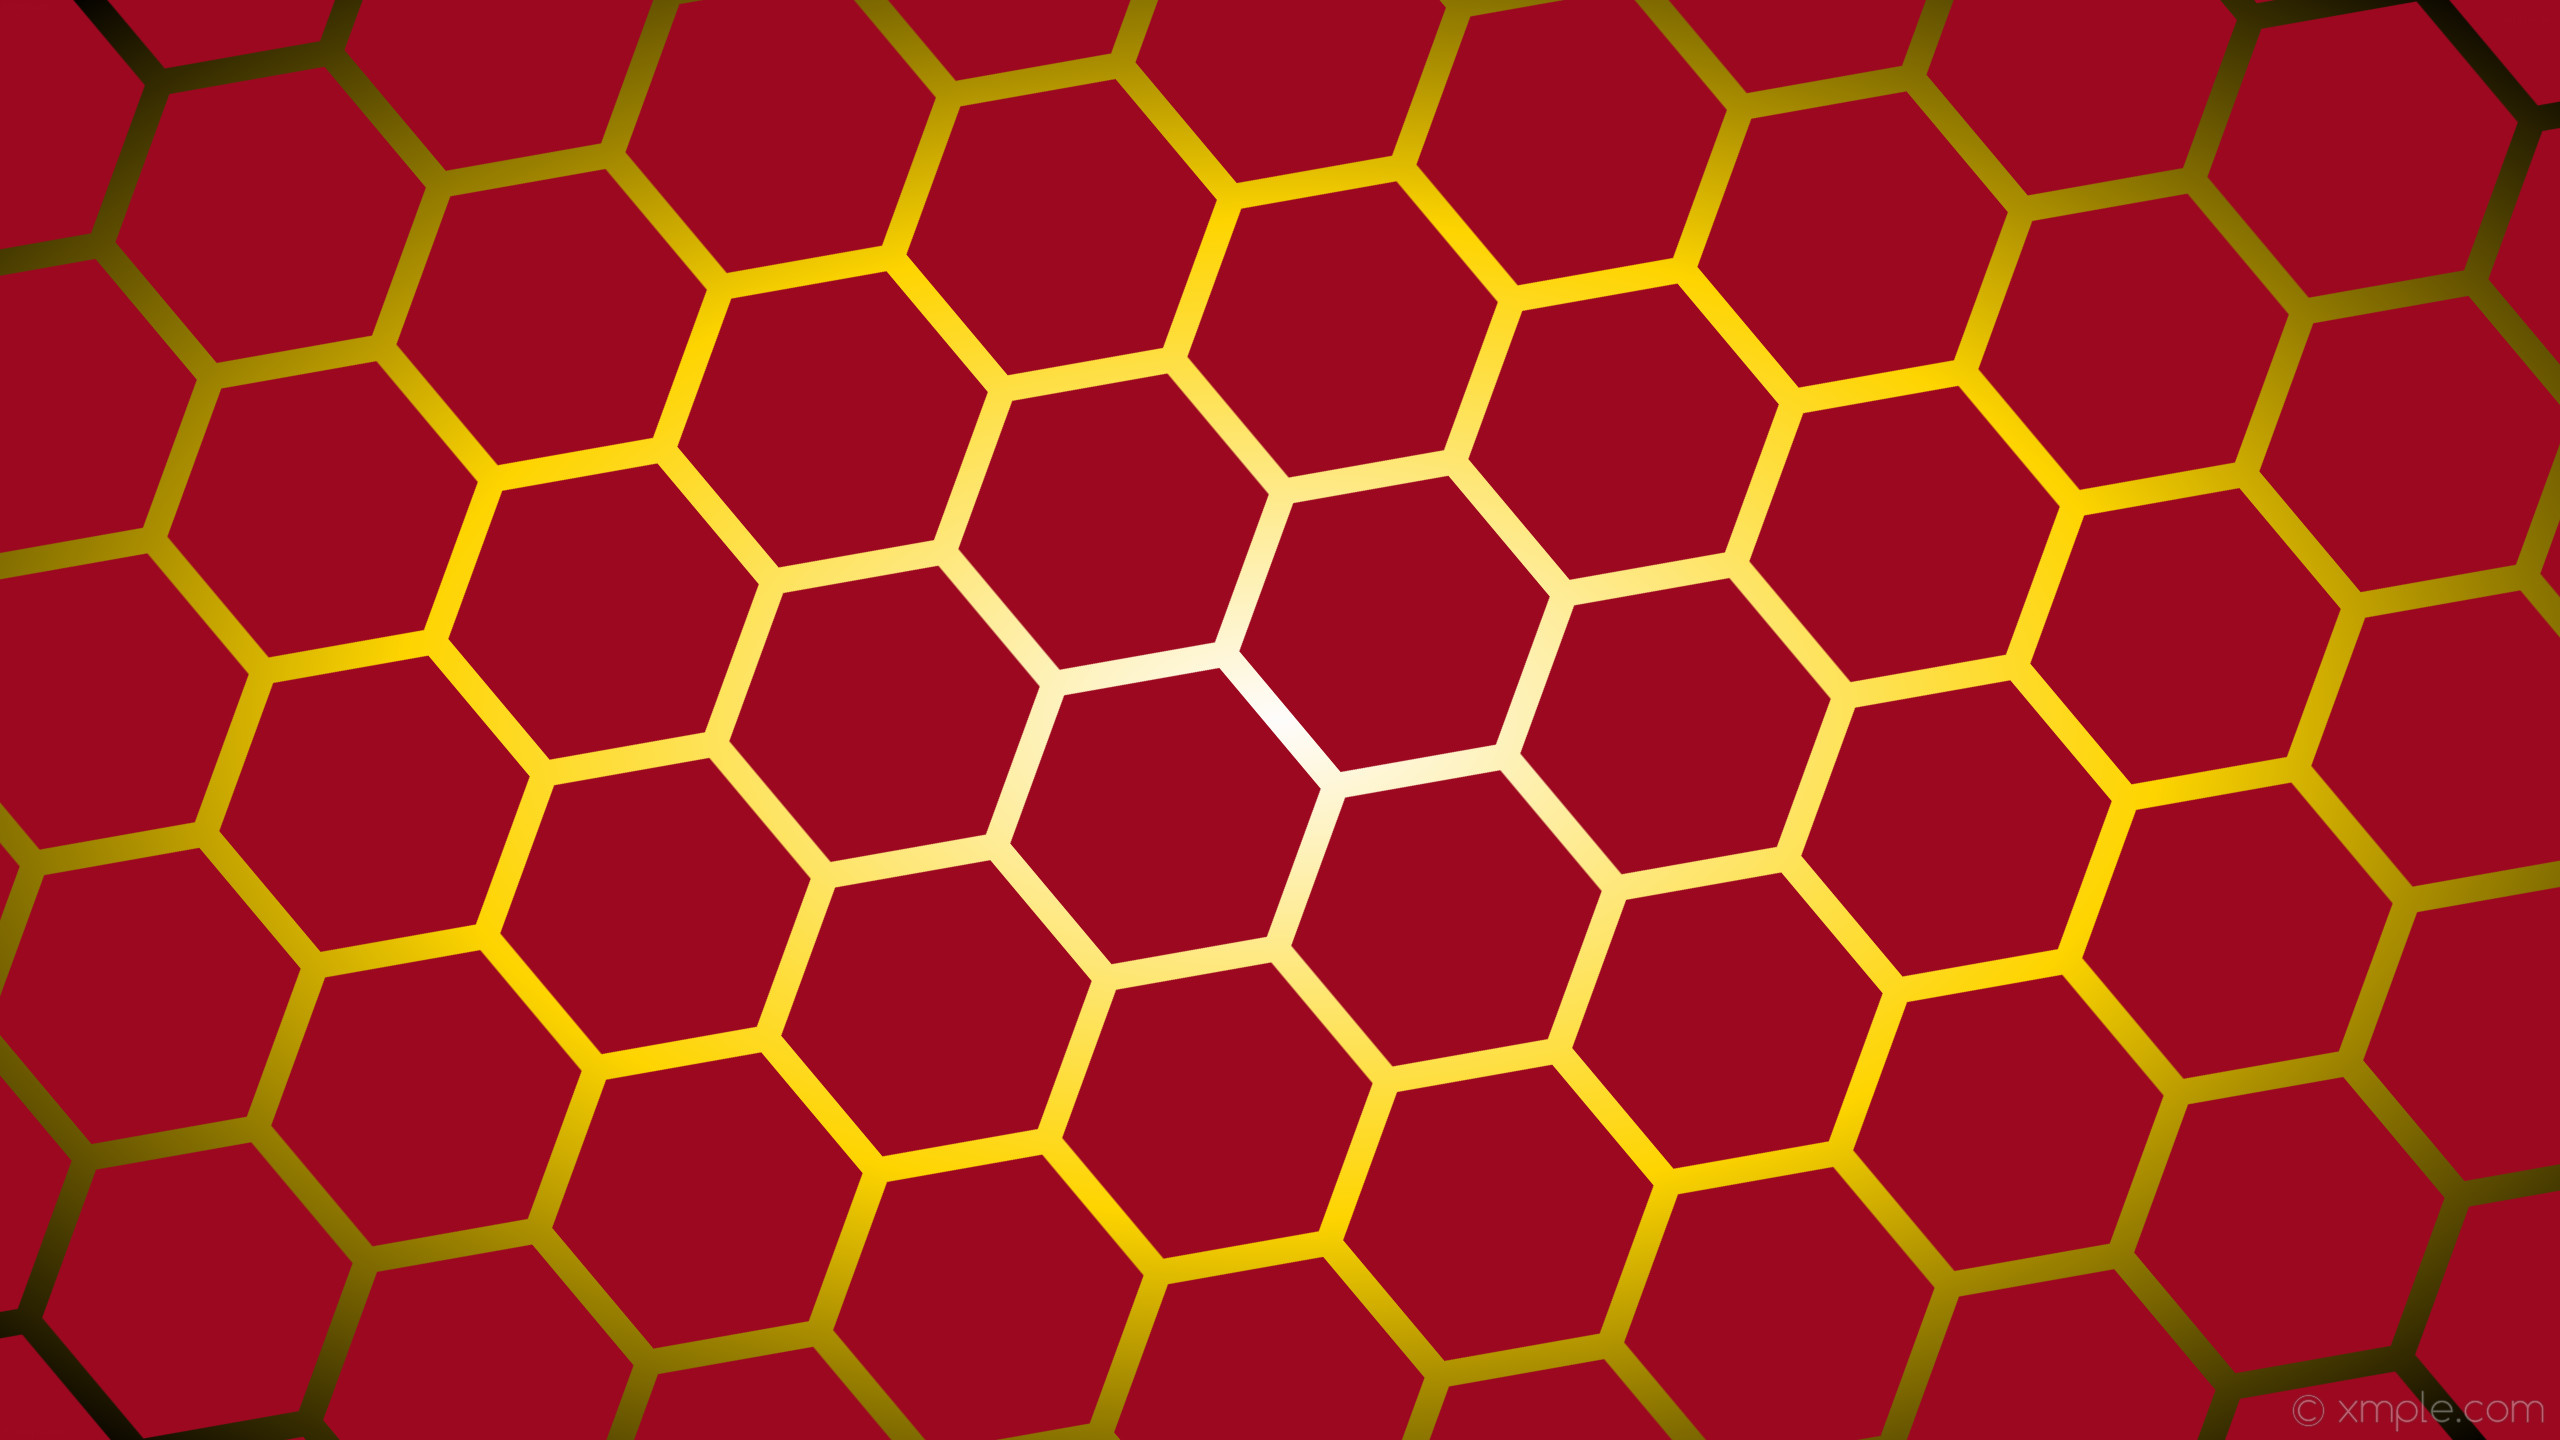 2560x1440 wallpaper yellow glow black red gradient hexagon white gold #9b0820 #ffffff  #ffd700 diagonal